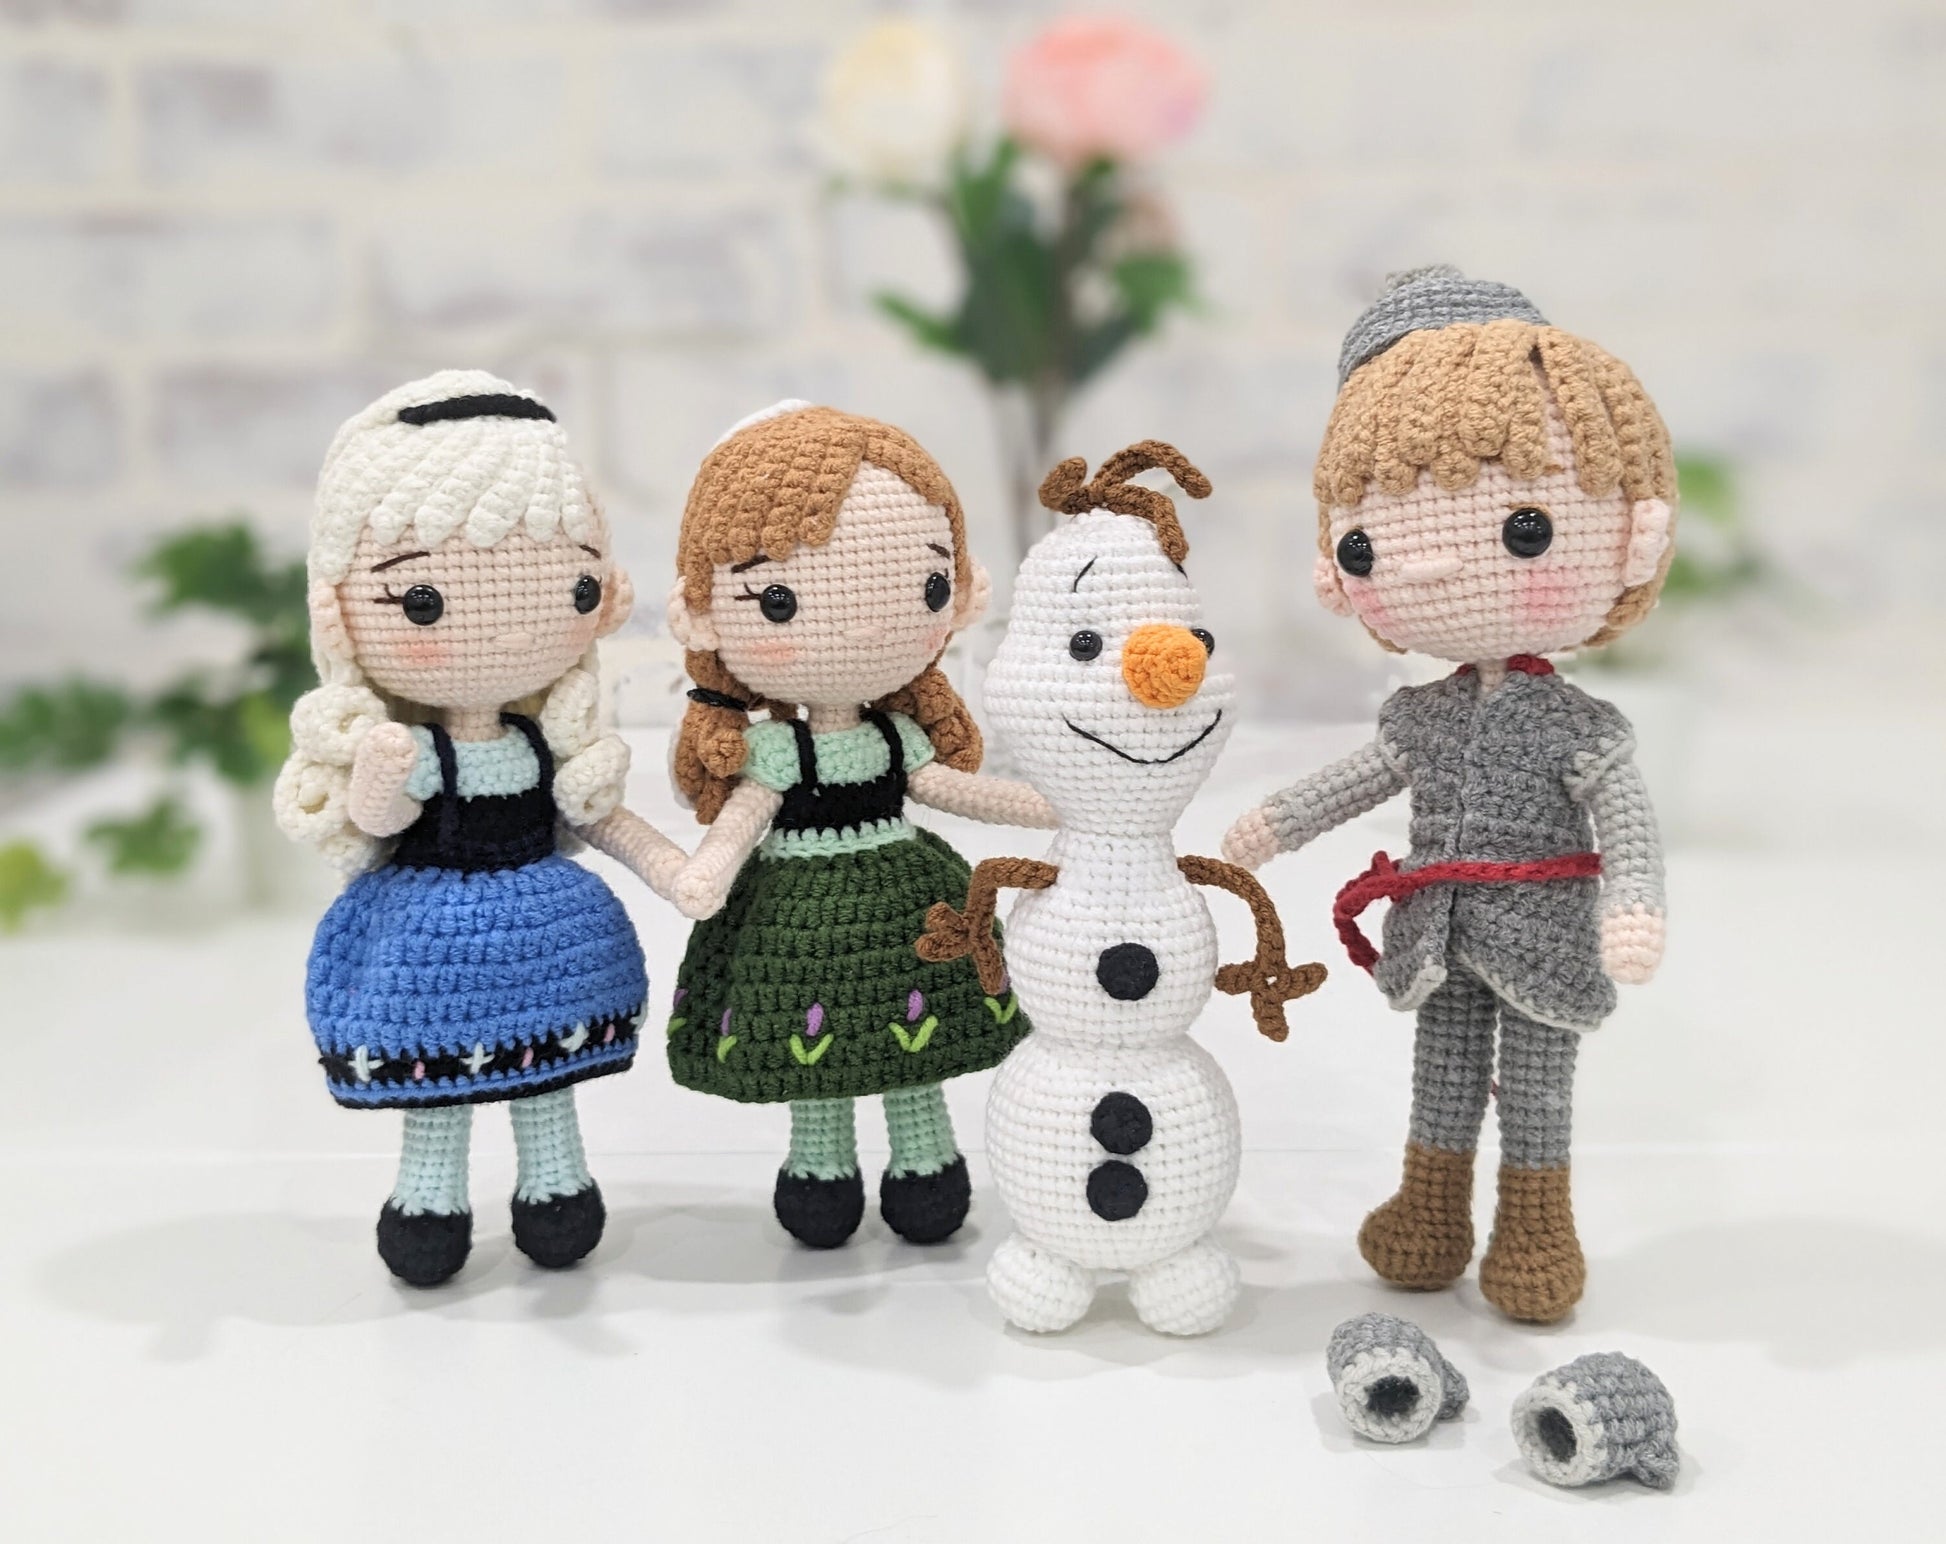 Disney Handmade Crochet Dolls